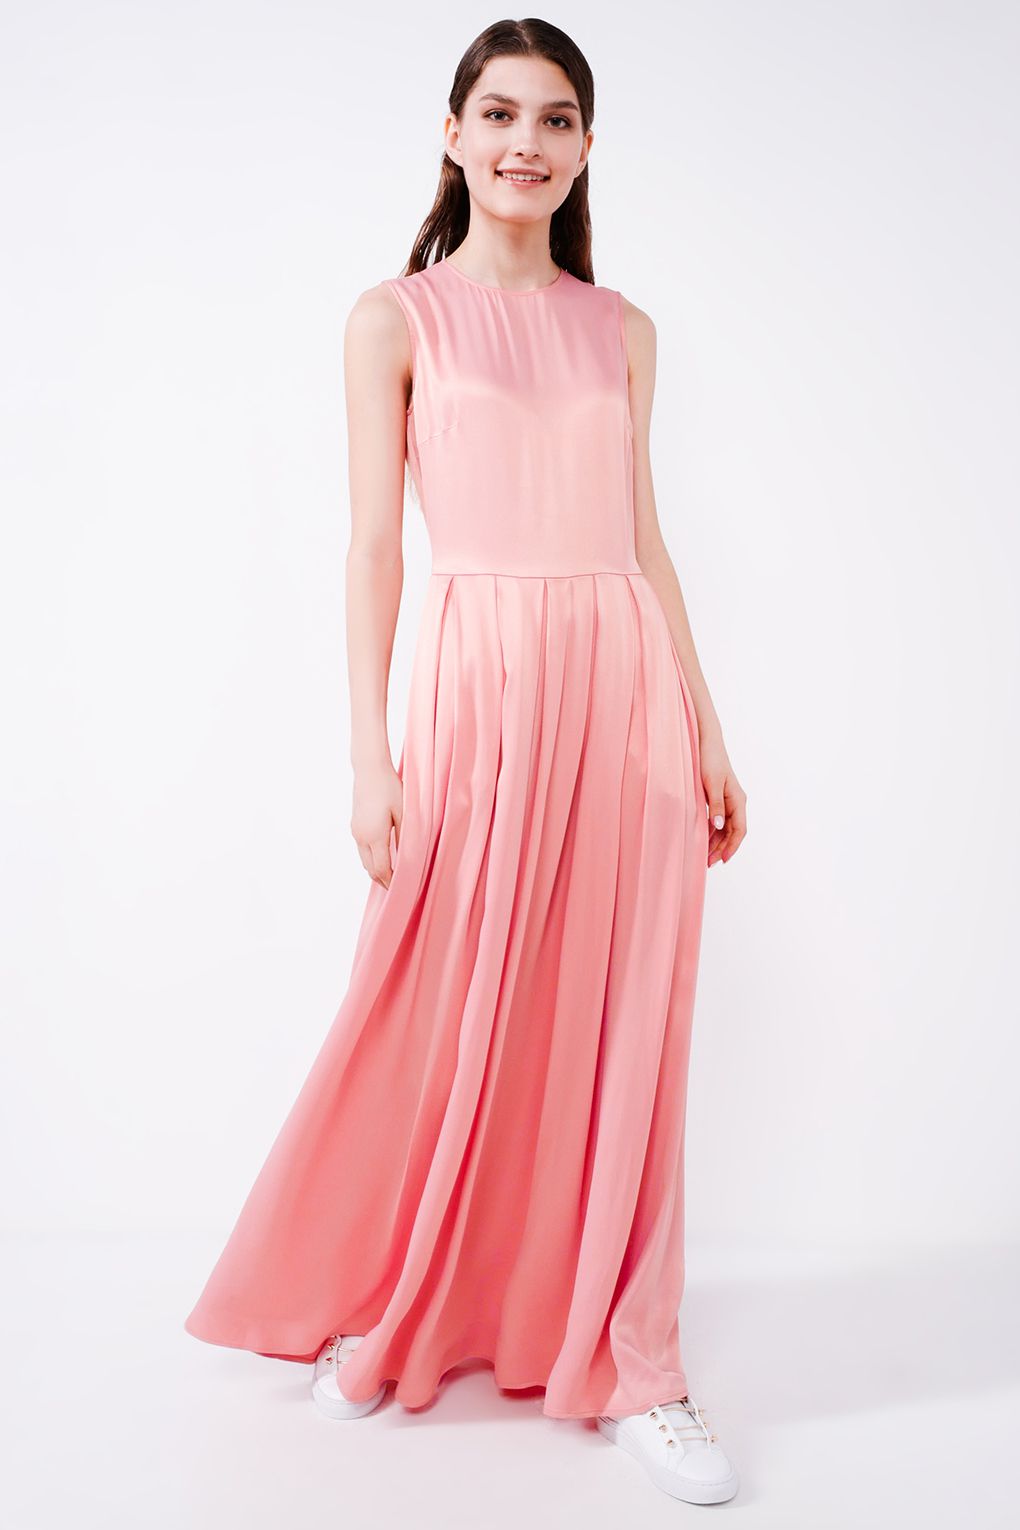 Платье женское PAOLA RAY PR120-3078 розовое XS